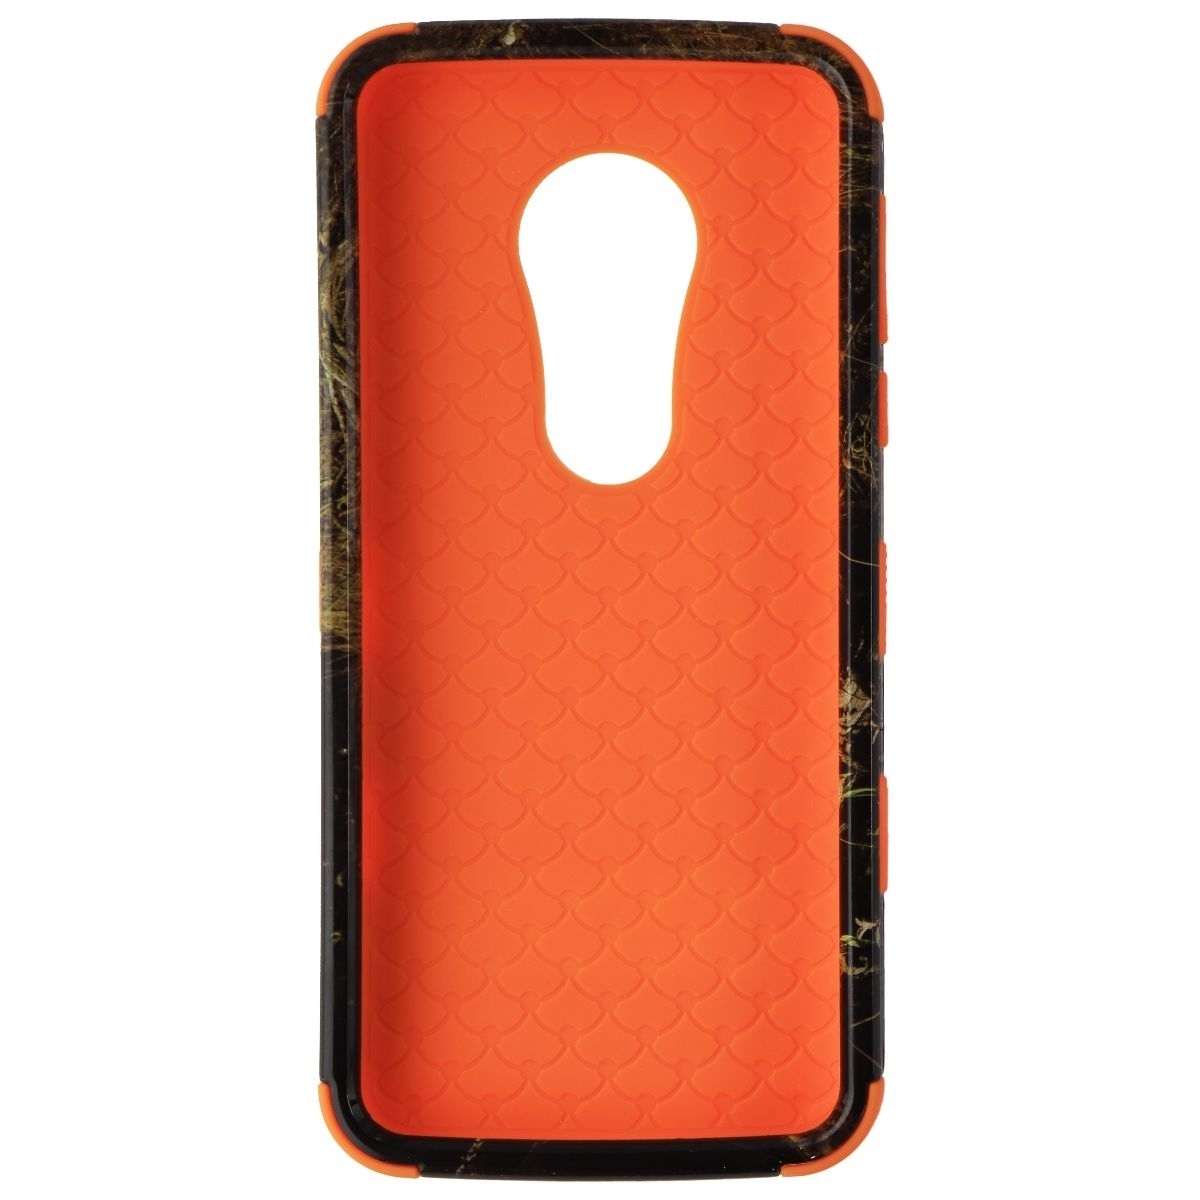 MyBat Tuff Series Case For Motorola Moto G6 Play - Camouflage (Refurbished)